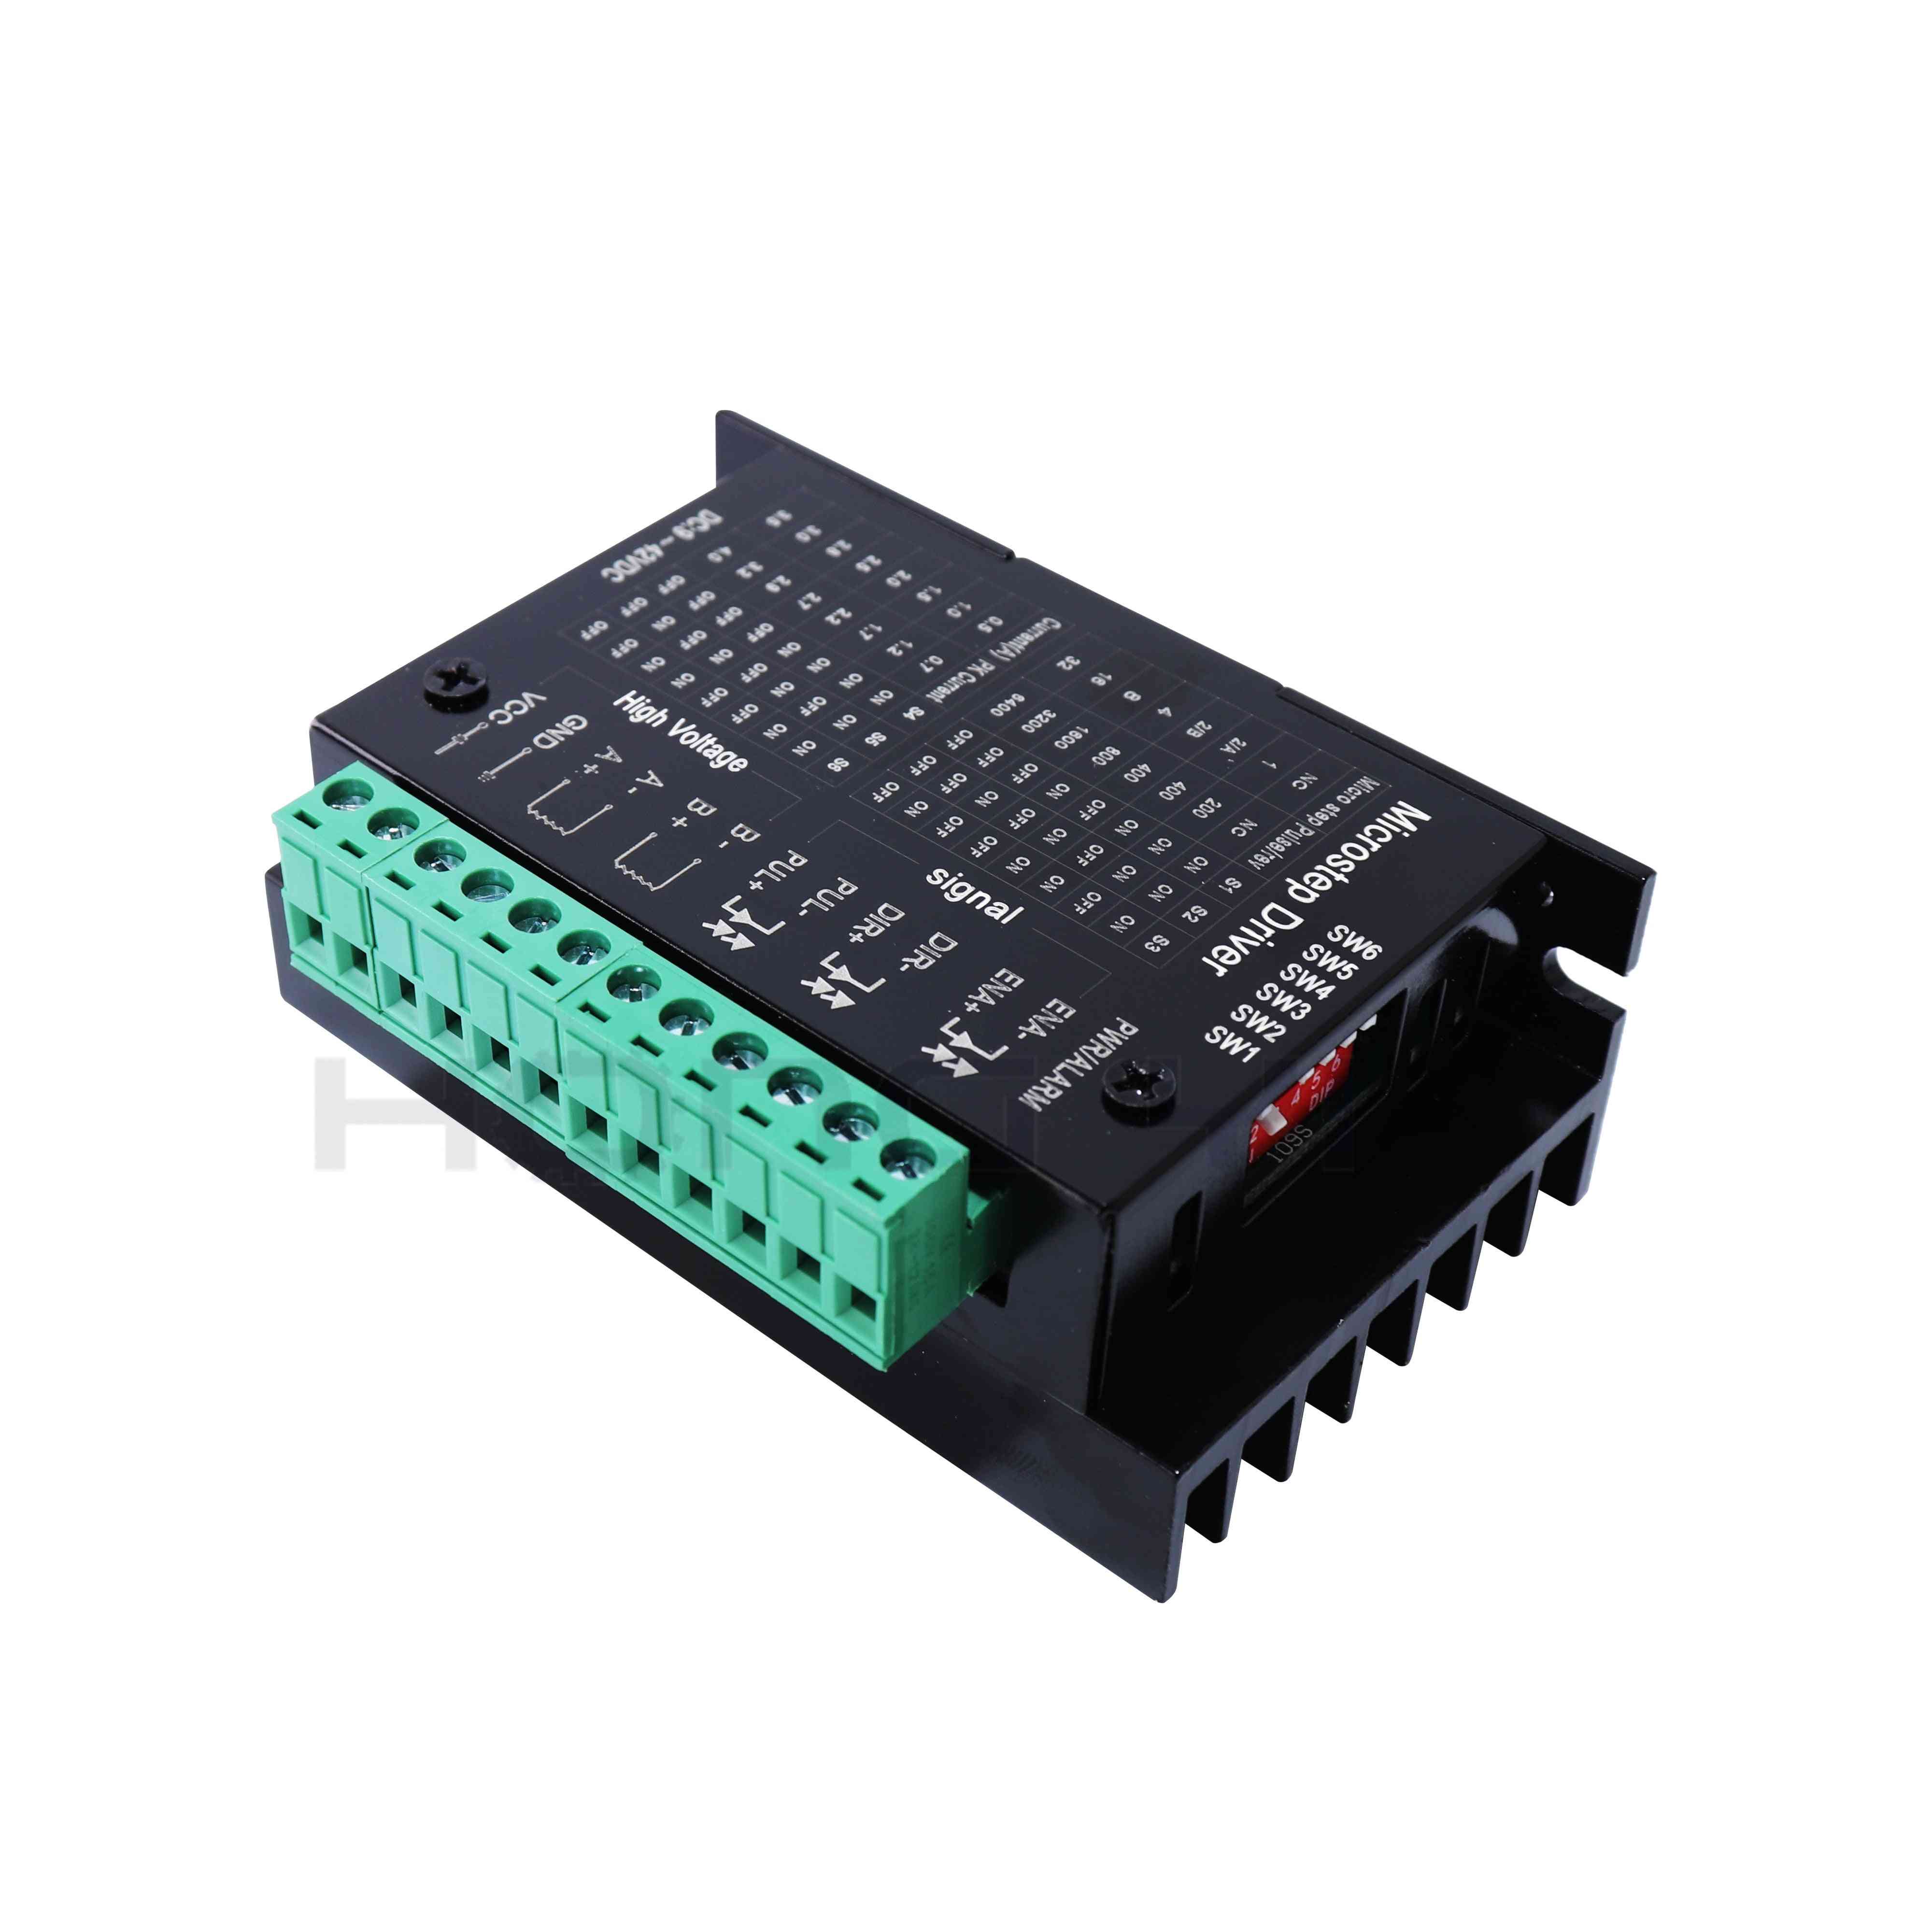 Tb6600 upgrade stappenmotor driver- s109aftg voor nema23 motor, 2 fase 4a cnc router controller voor 3d printer - tb6600 x1pcs